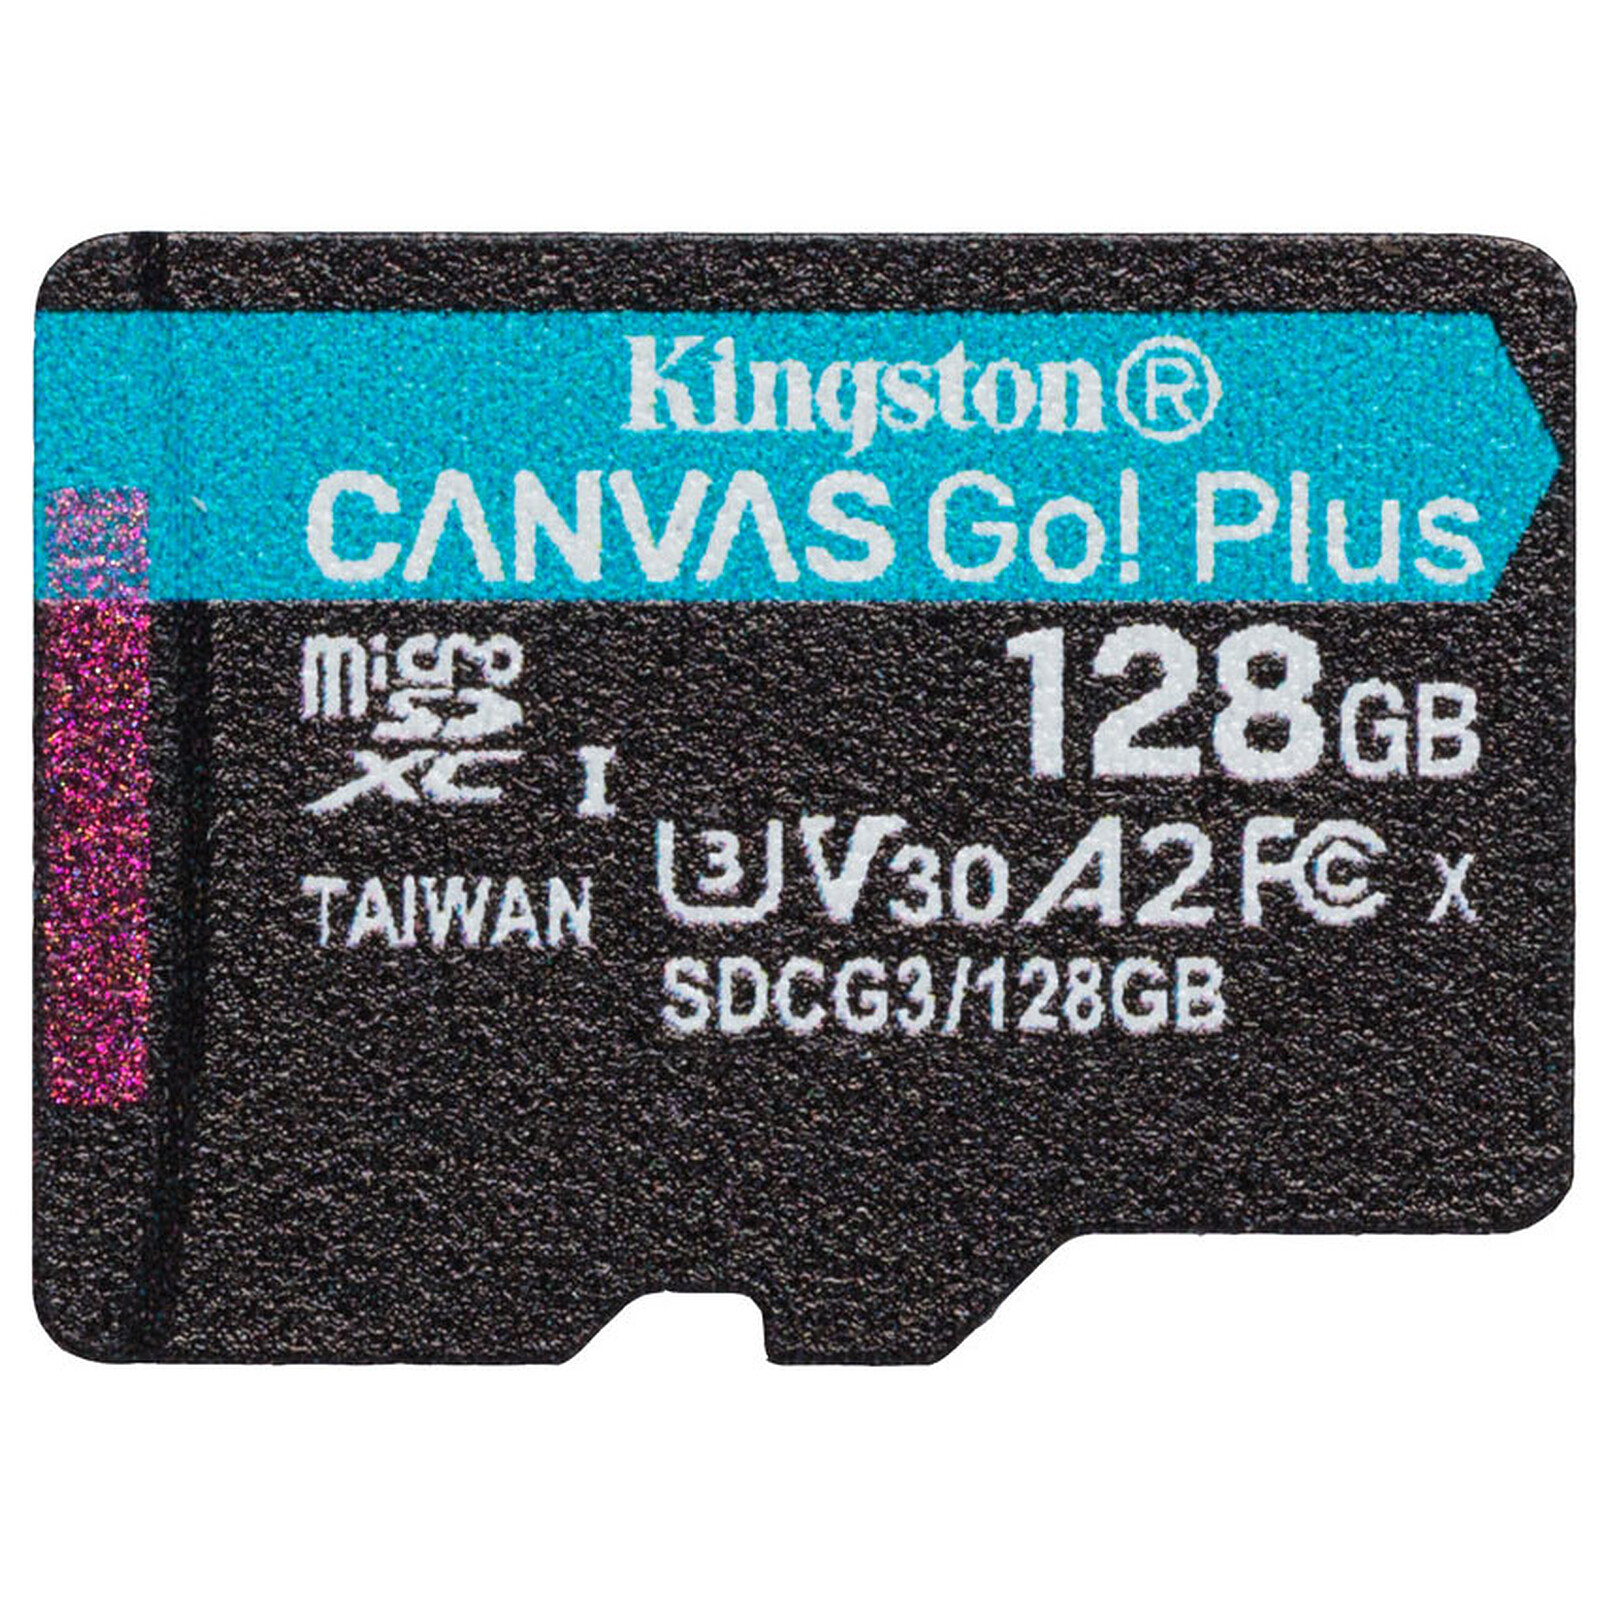 SanDisk Ultra carte microSD UHS-I 512 Go, 120 Mo/s R : :  Électronique